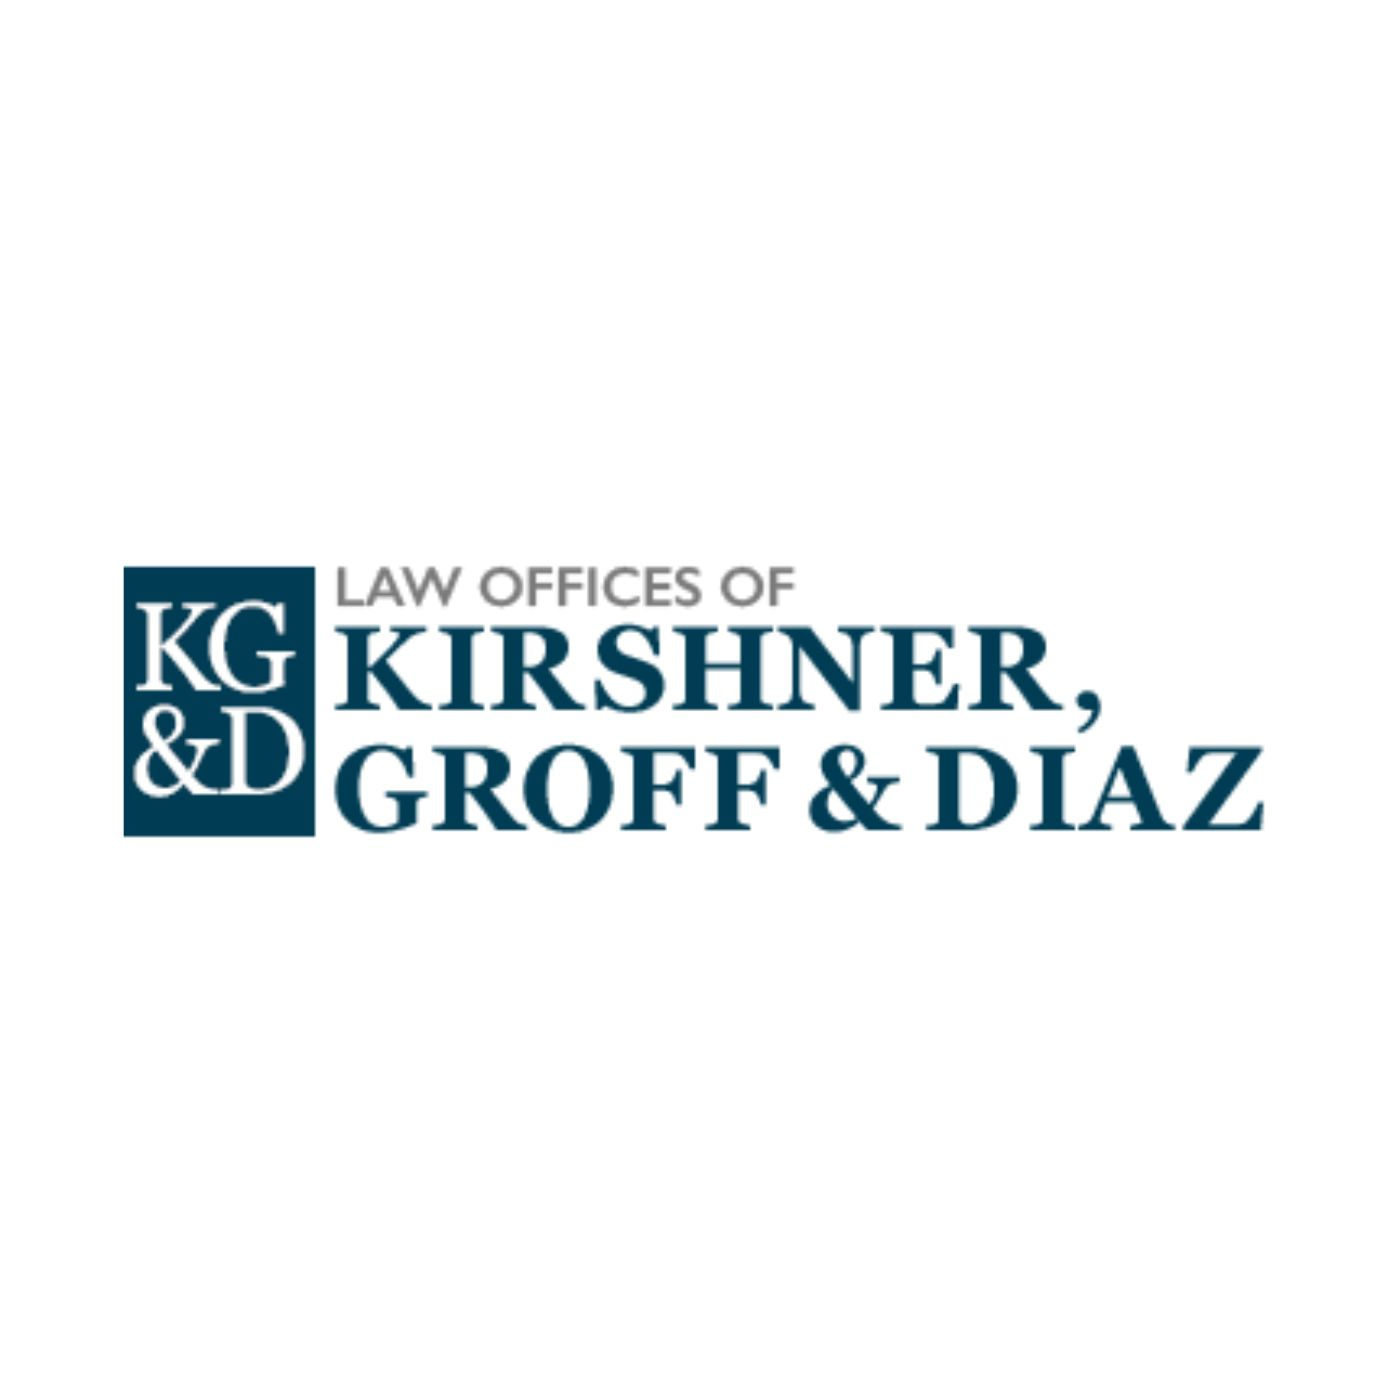 Law Offices of Kirshner, Groff & Diaz'